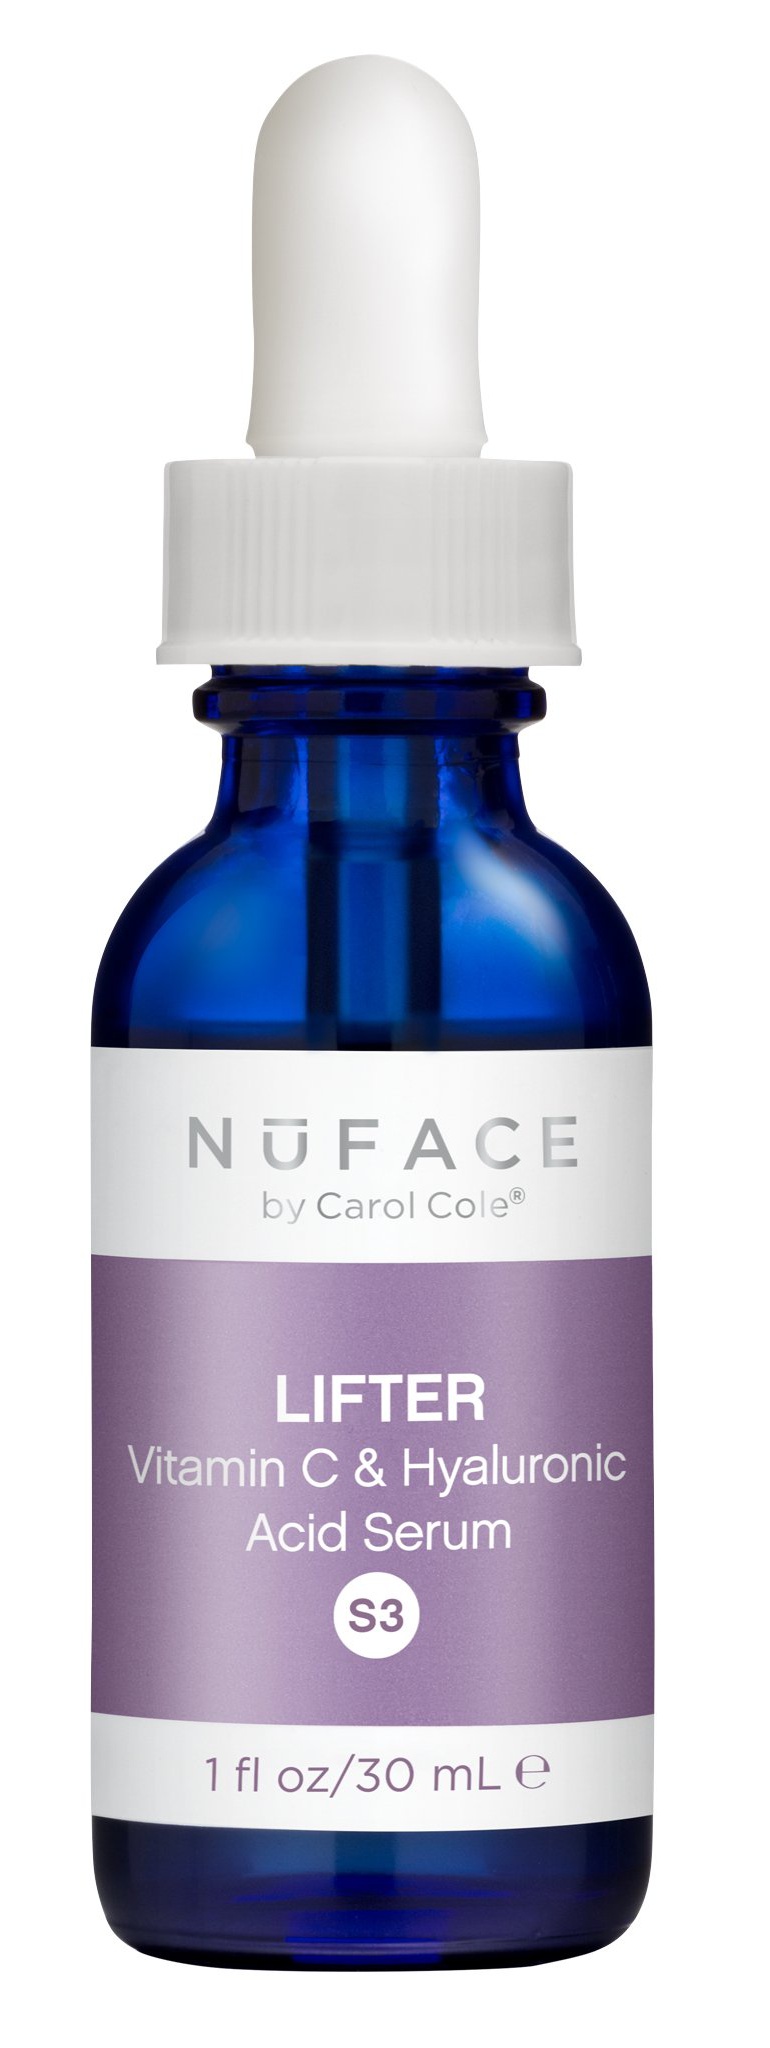 Nuface Lifter Vitamin C & Hyaluronic Acid Serum